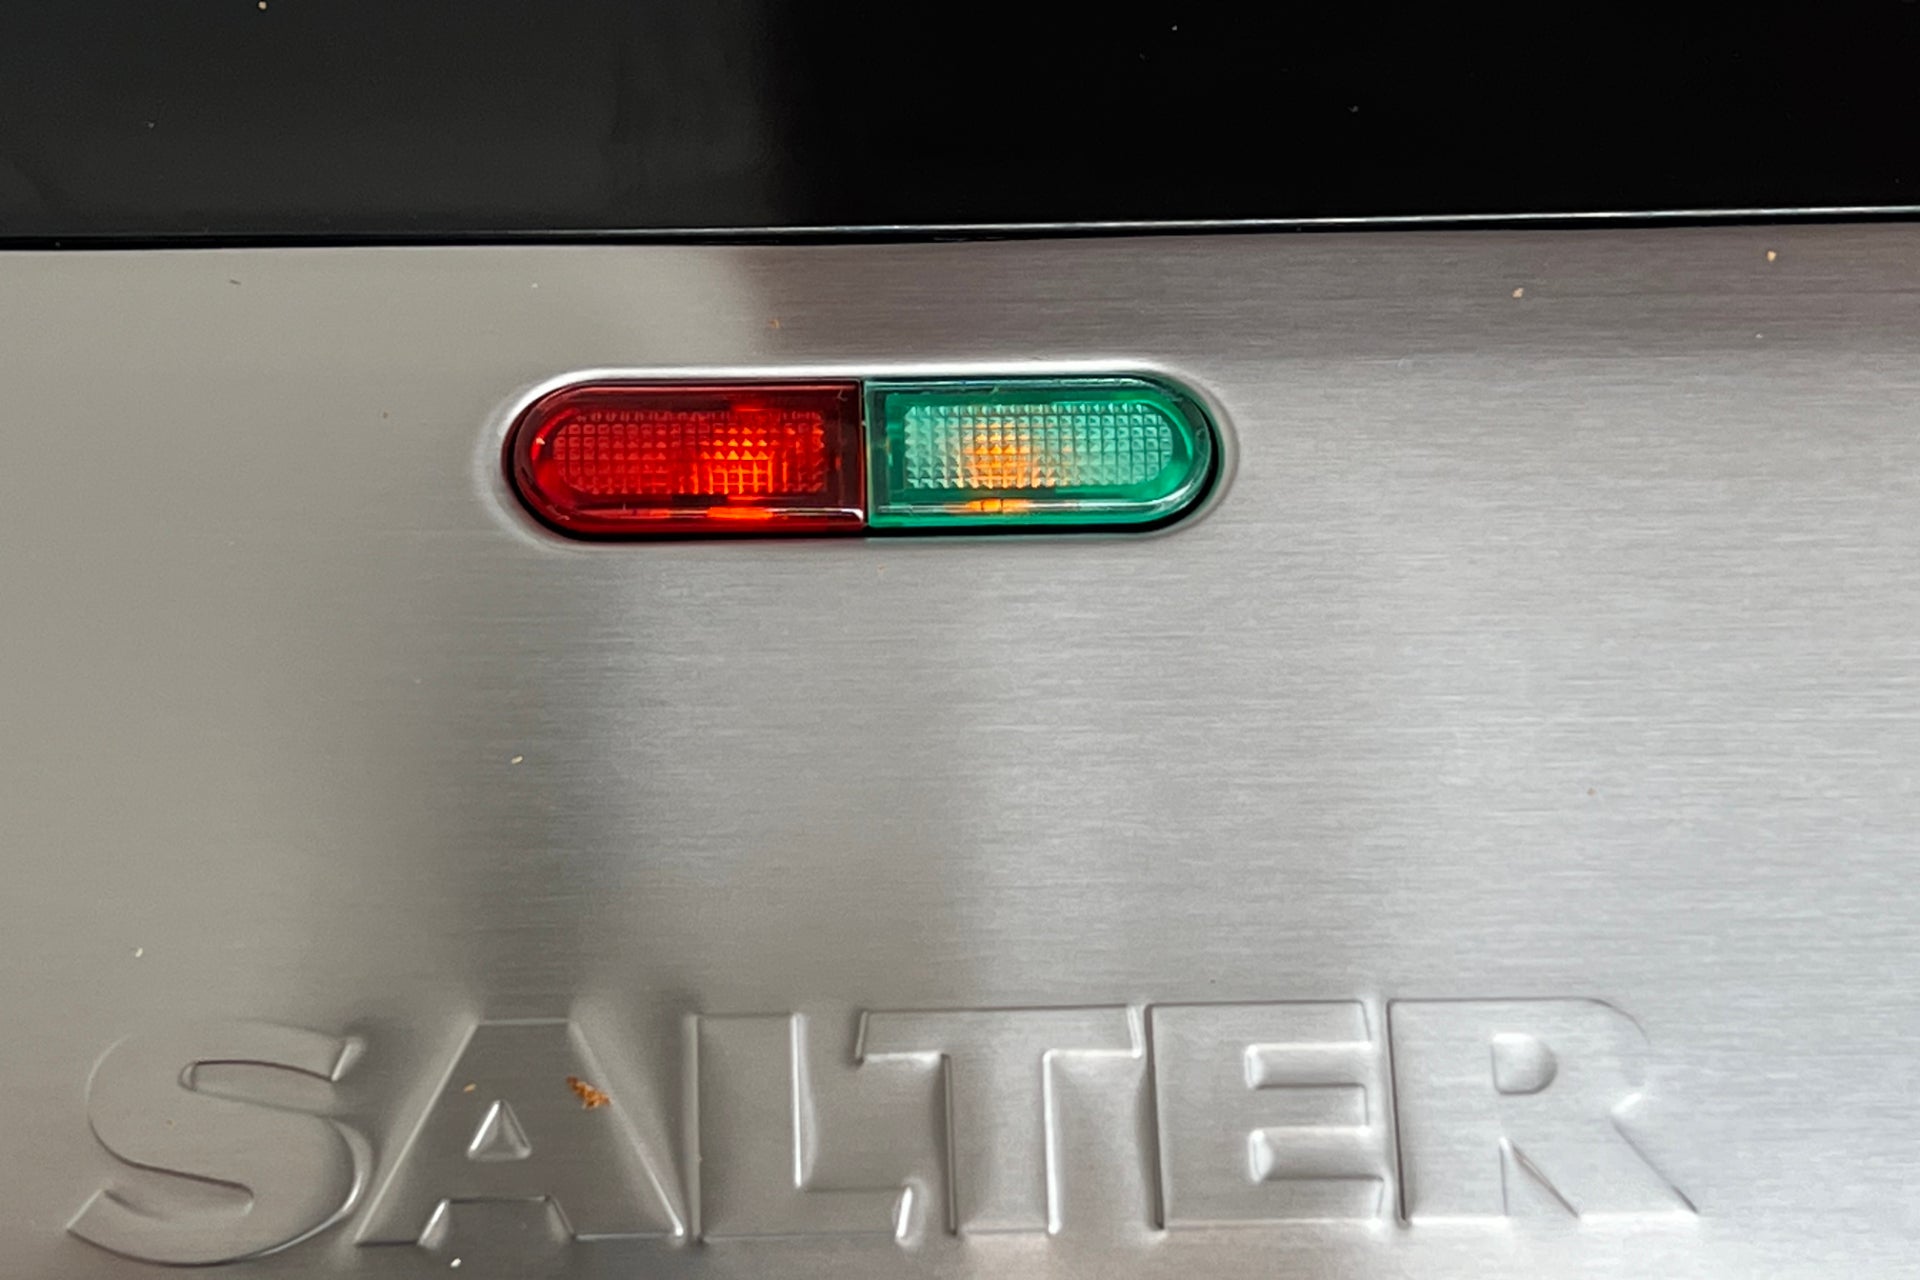 Salter EK2143 3-In-1 Snack Maker indicator lights